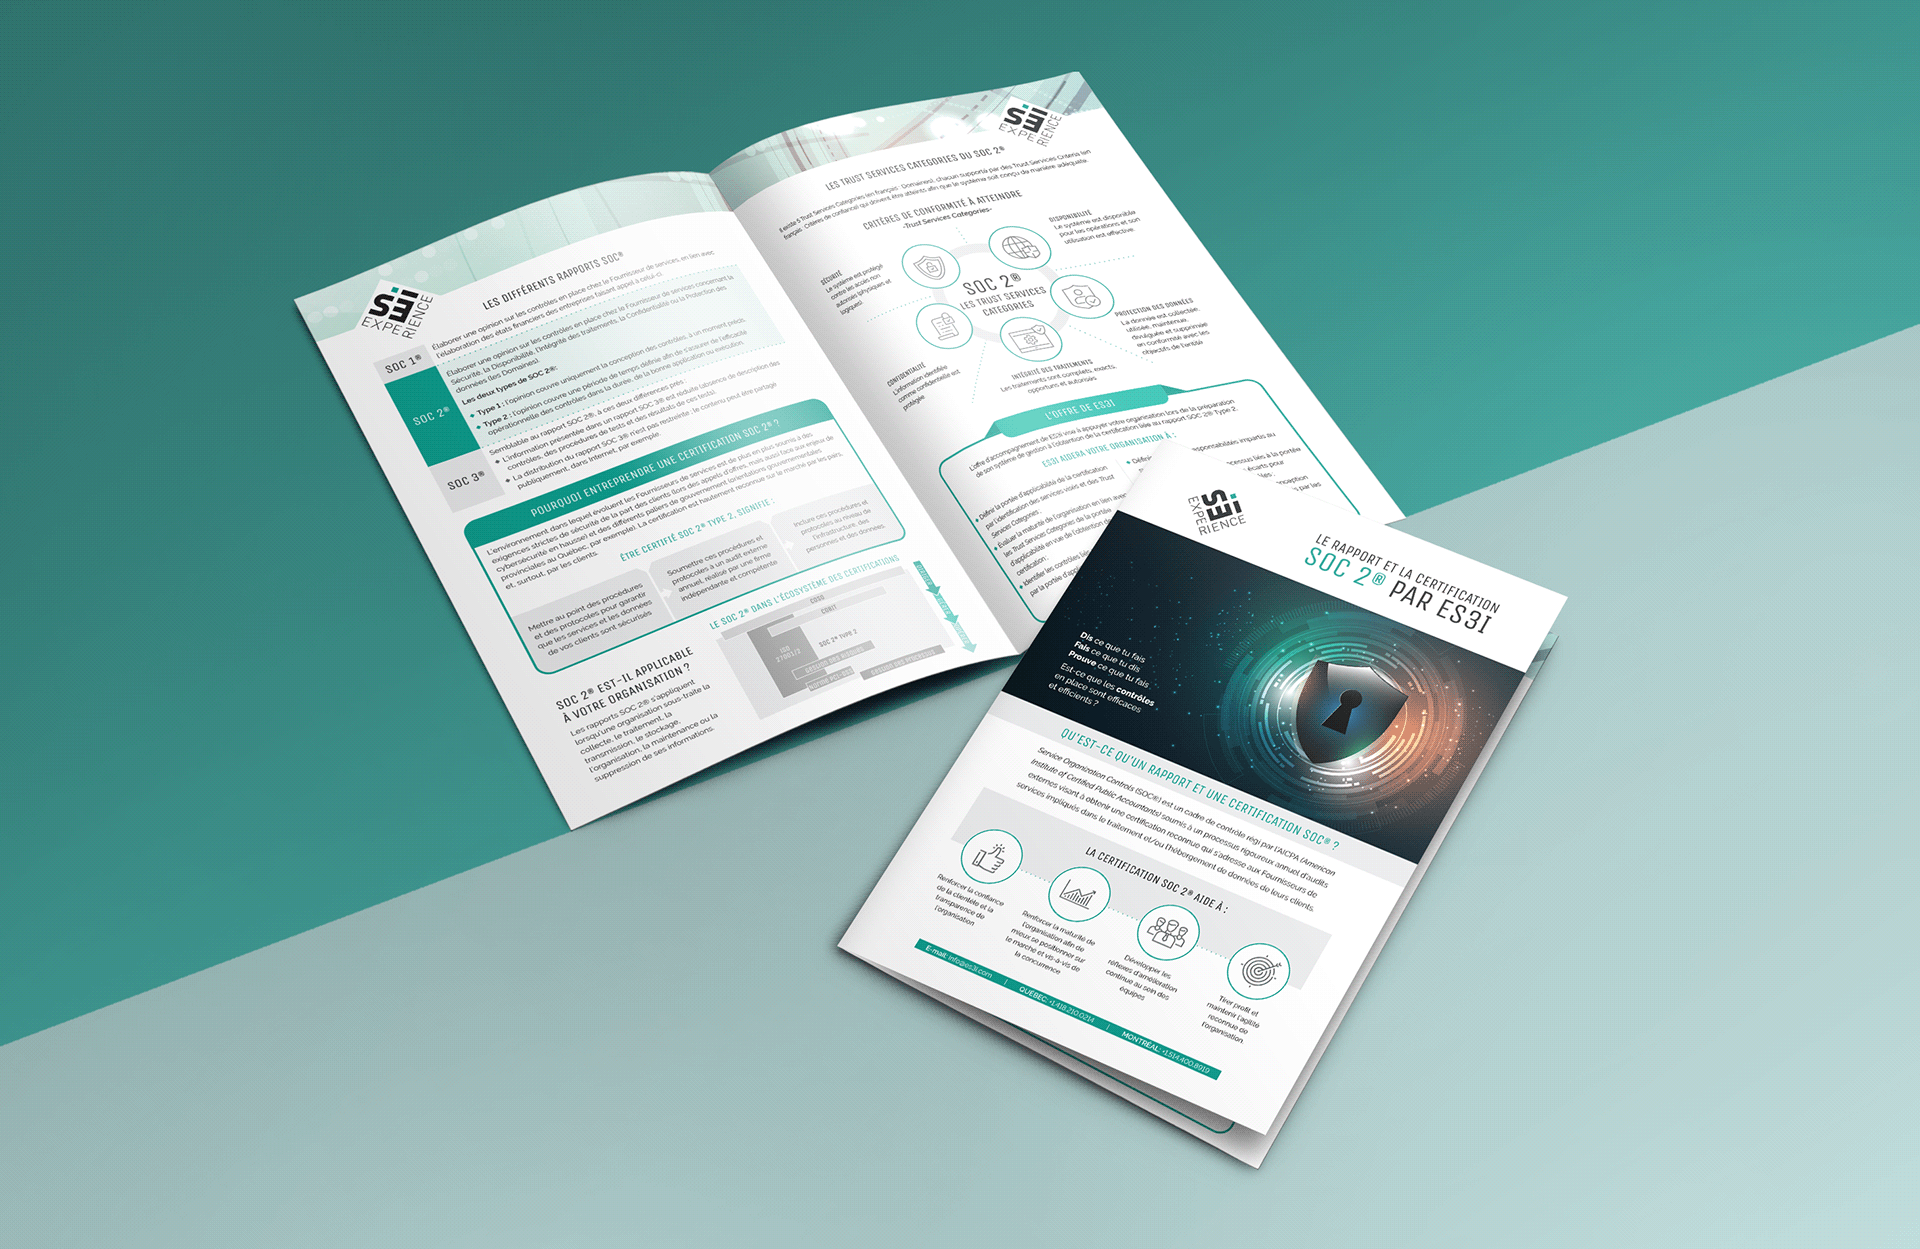 Bifold Brochure Design about SOC Certification by Elivera Designs